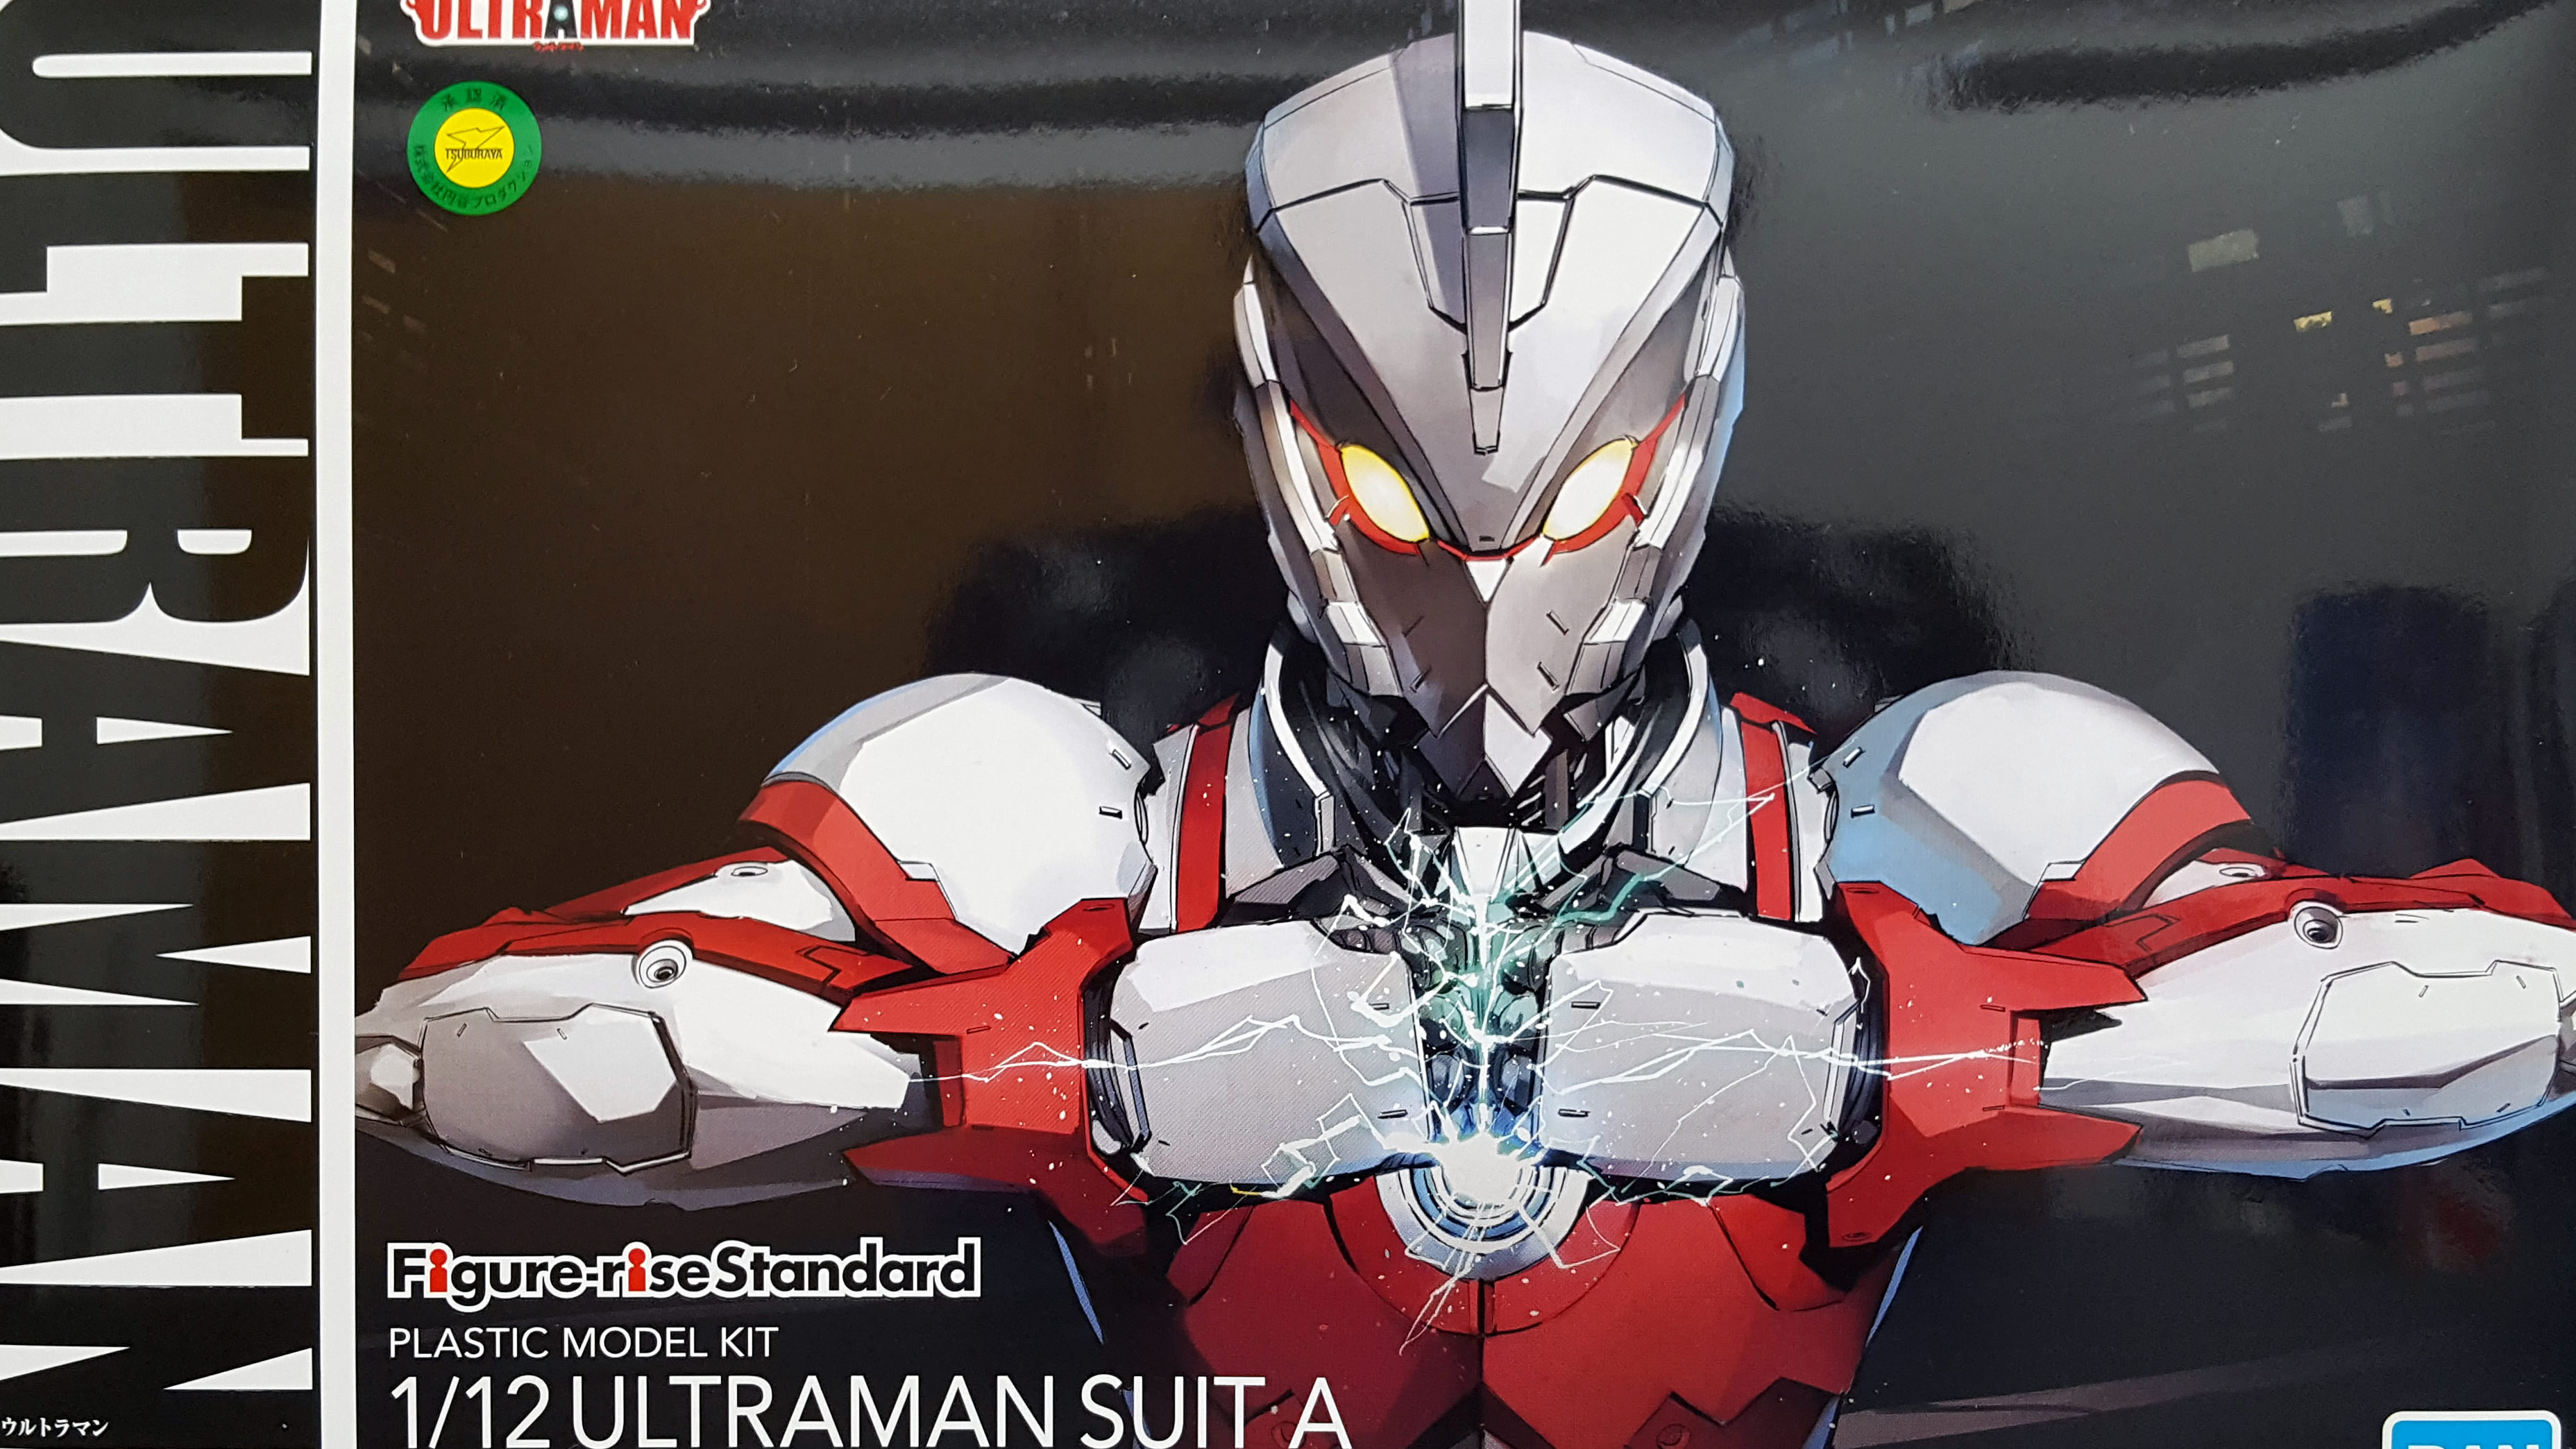 Figure-rise Standard Ultraman ULTRAMAN SUIT A 1/12 Plastic Model Kit 